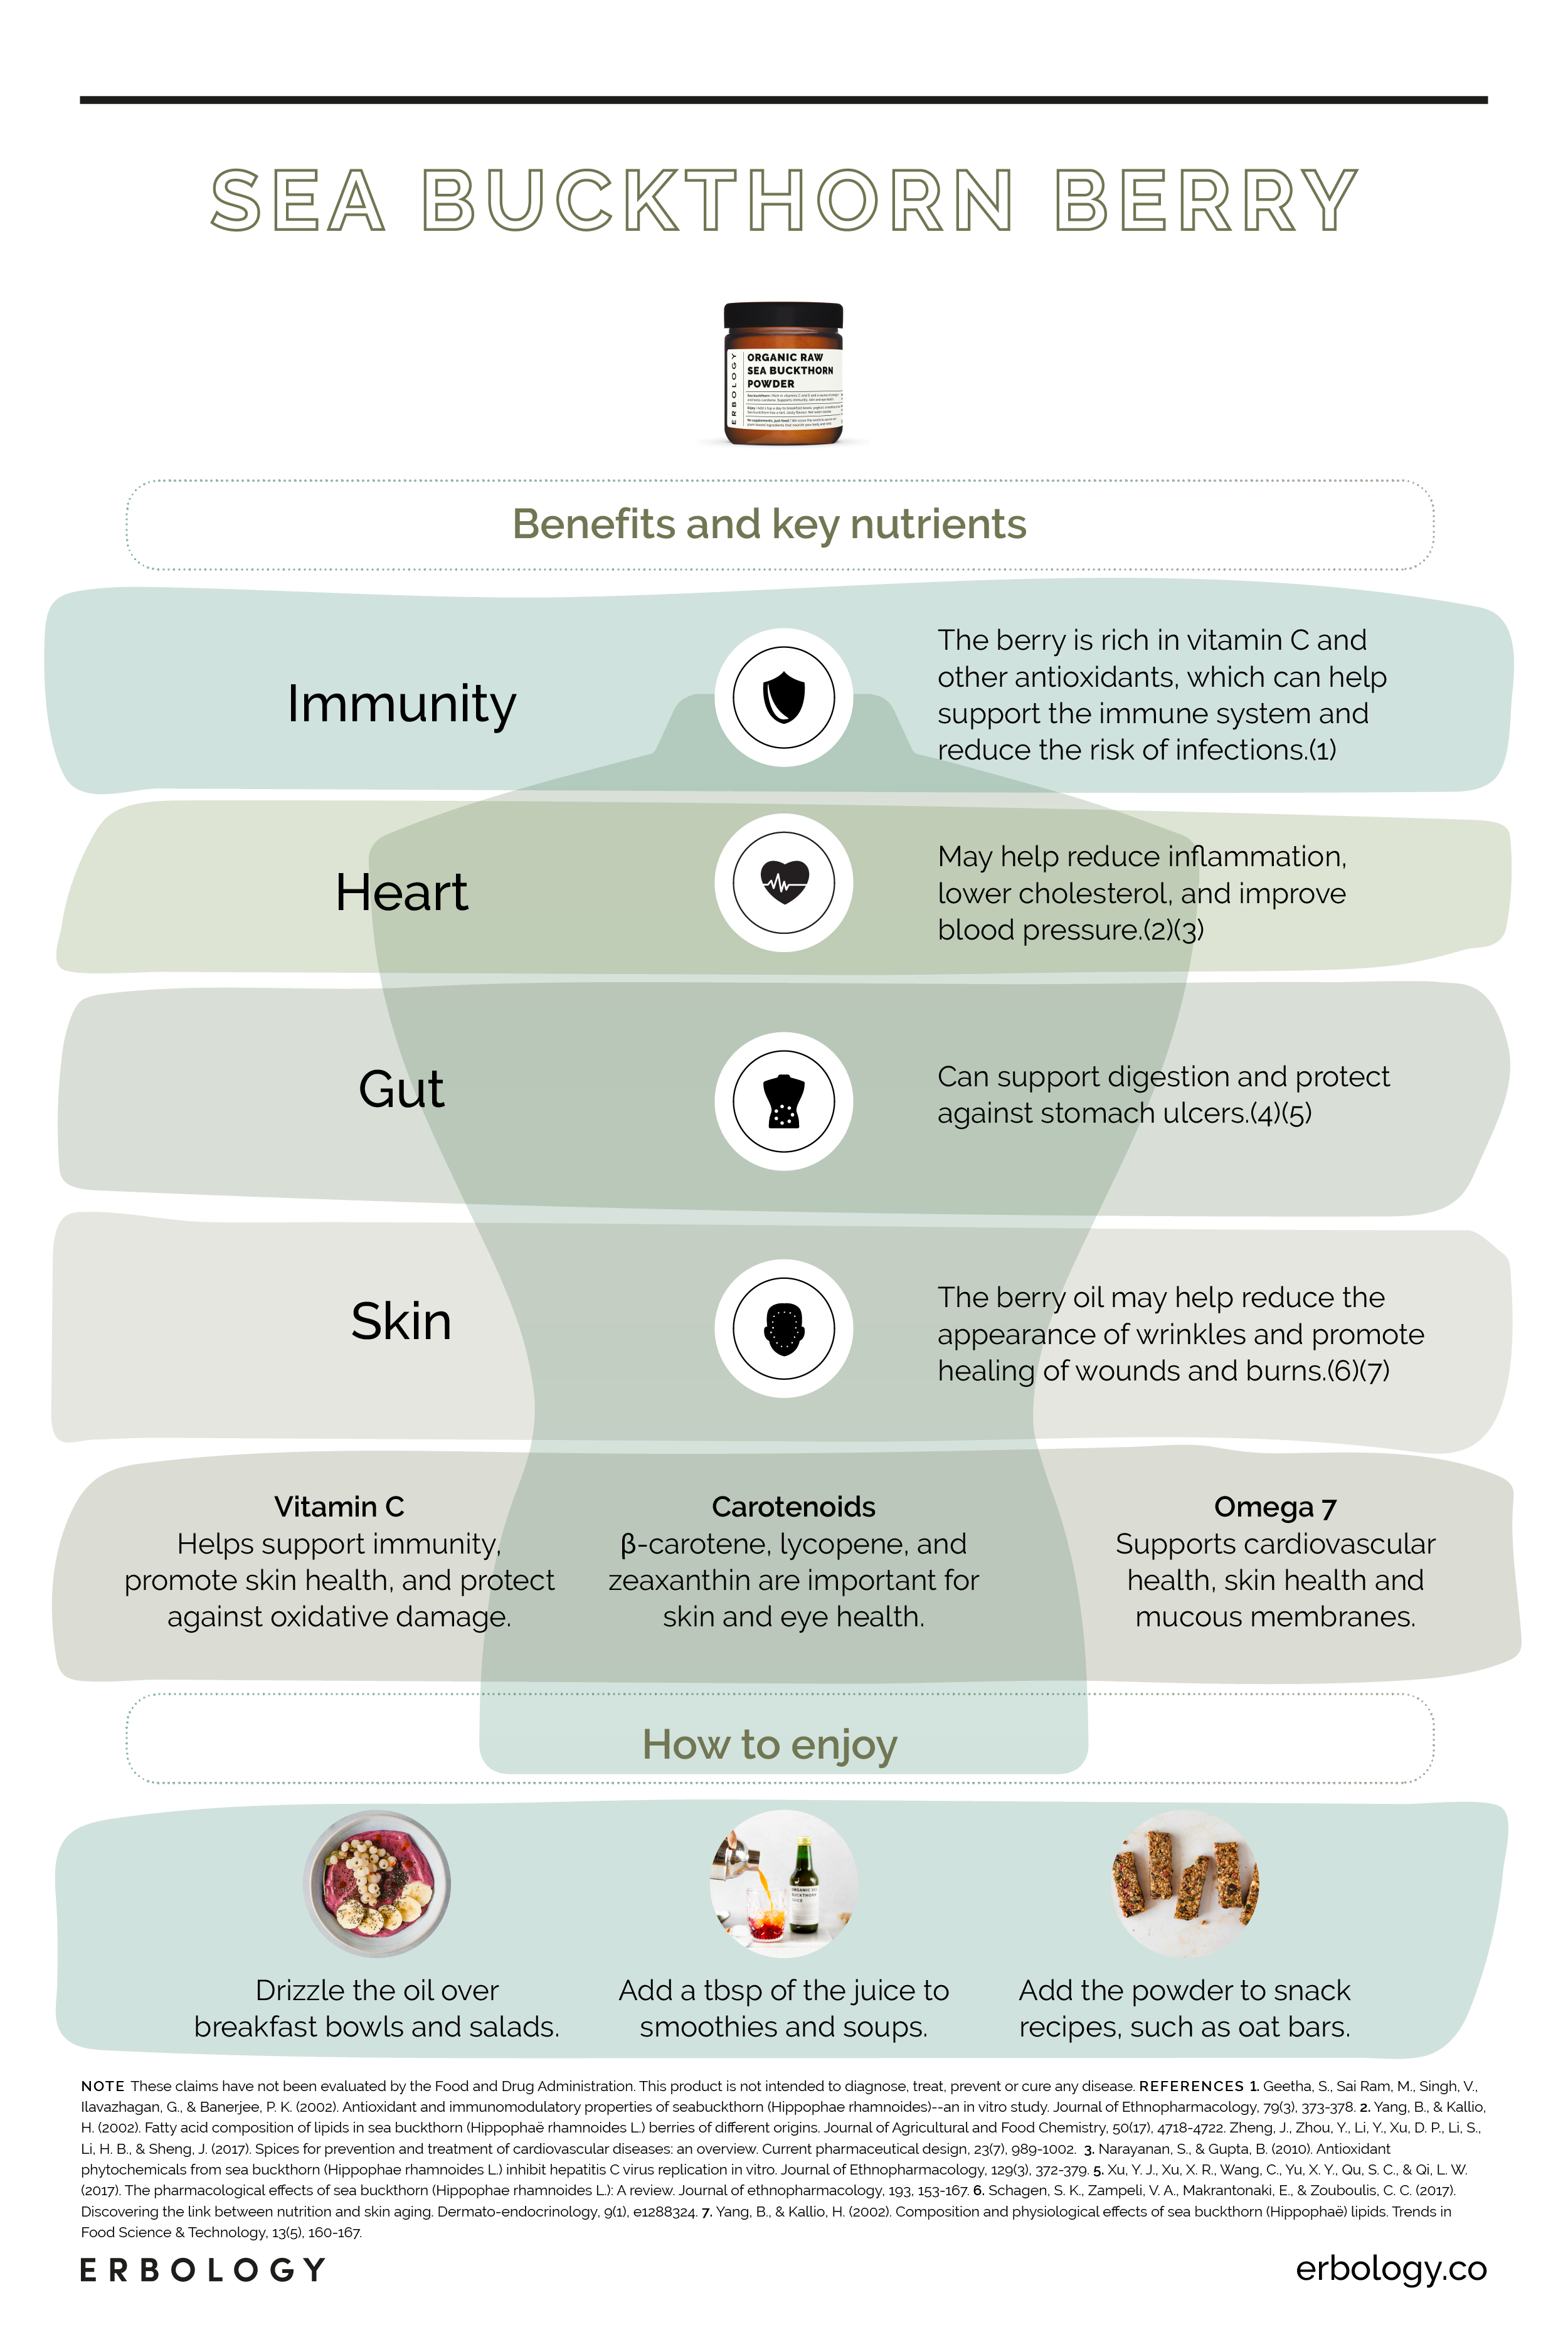 sea buckthorn health benefits